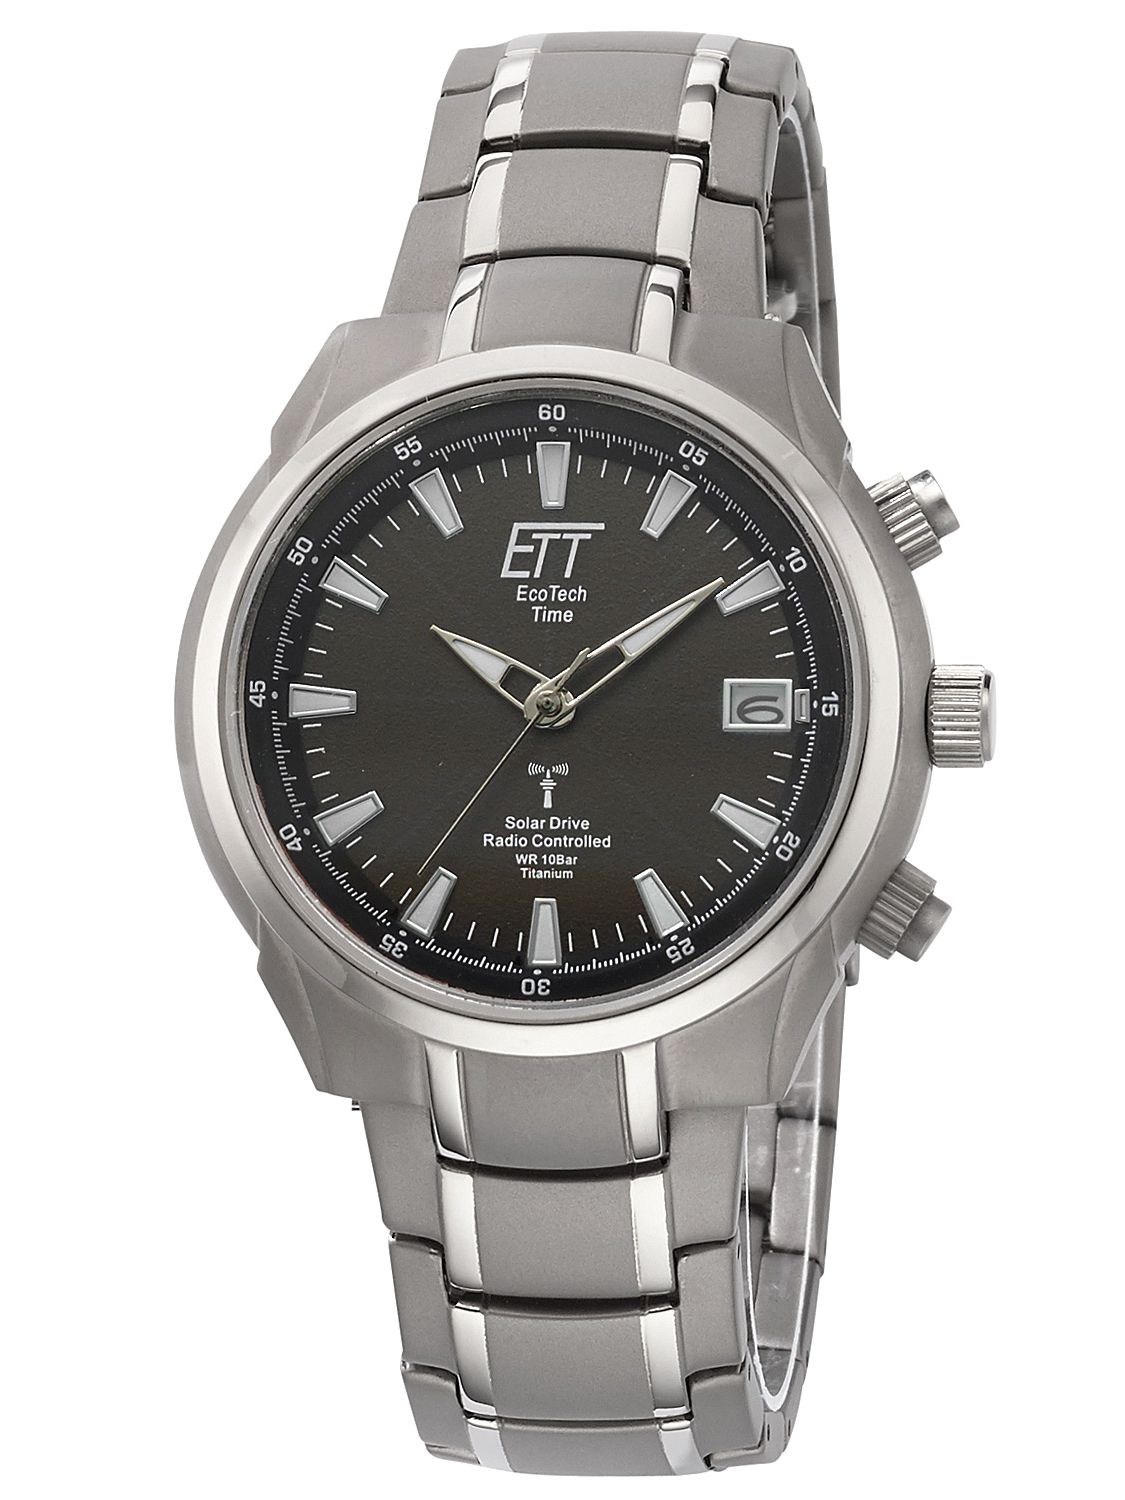 ETT Eco Tech Time Solar Drive Funk Herren-Armbanduhr Aquanaut II EGT-11340-61M  • uhrcenter